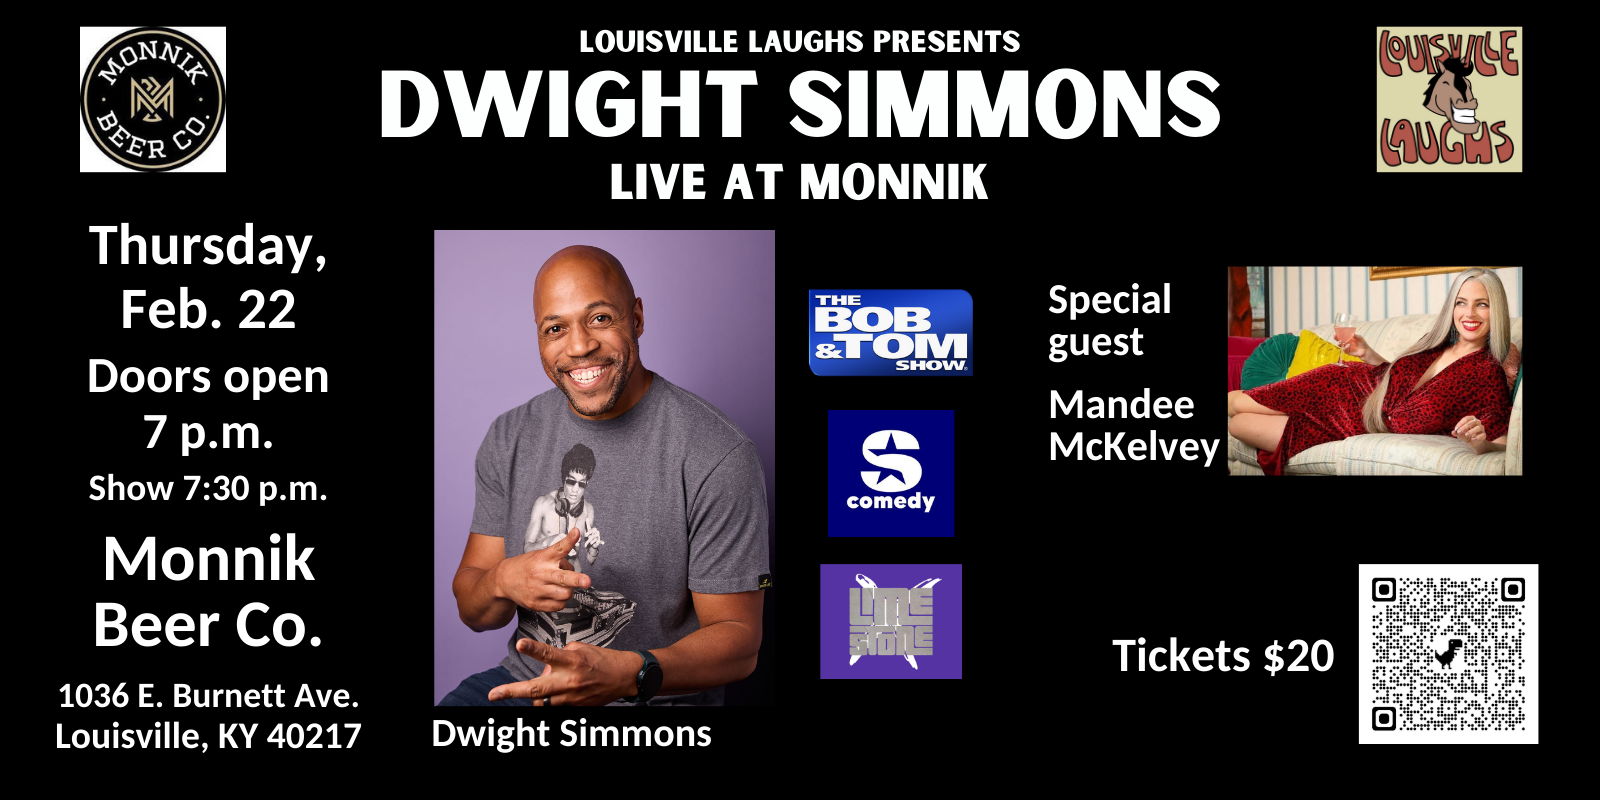 Dwight Simmons: Live at Monnik promotional image